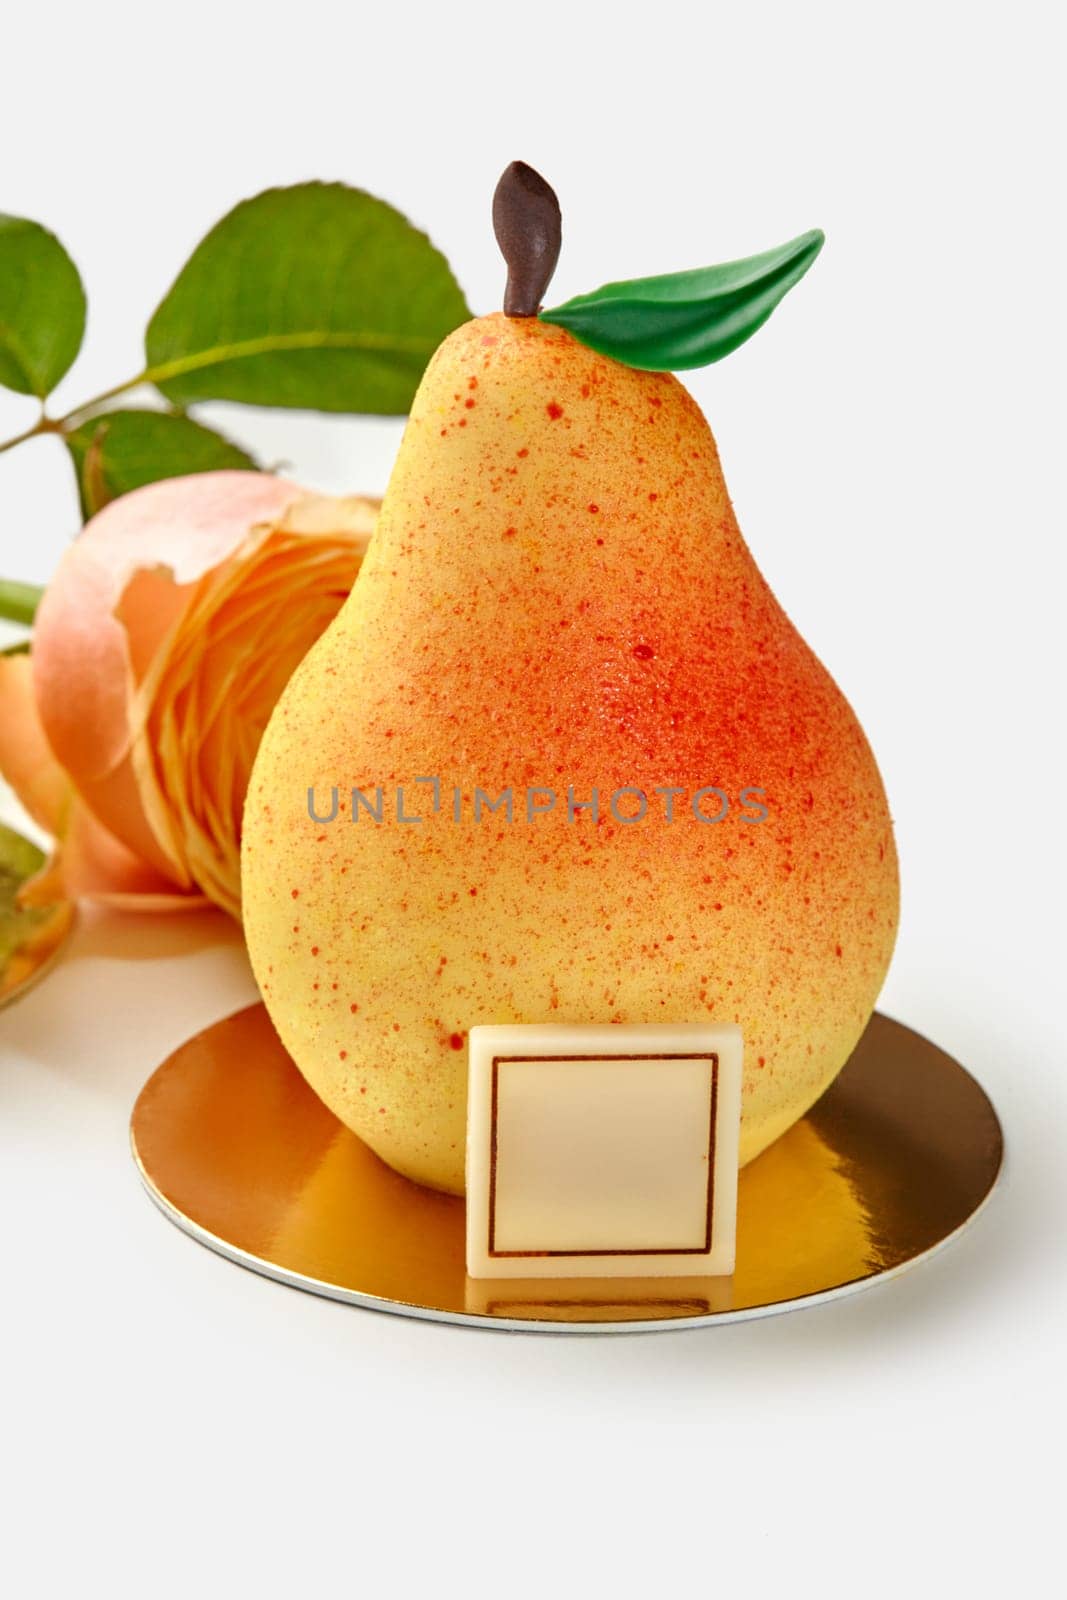 Artisan dessert in shape of pear on gold plate by nazarovsergey